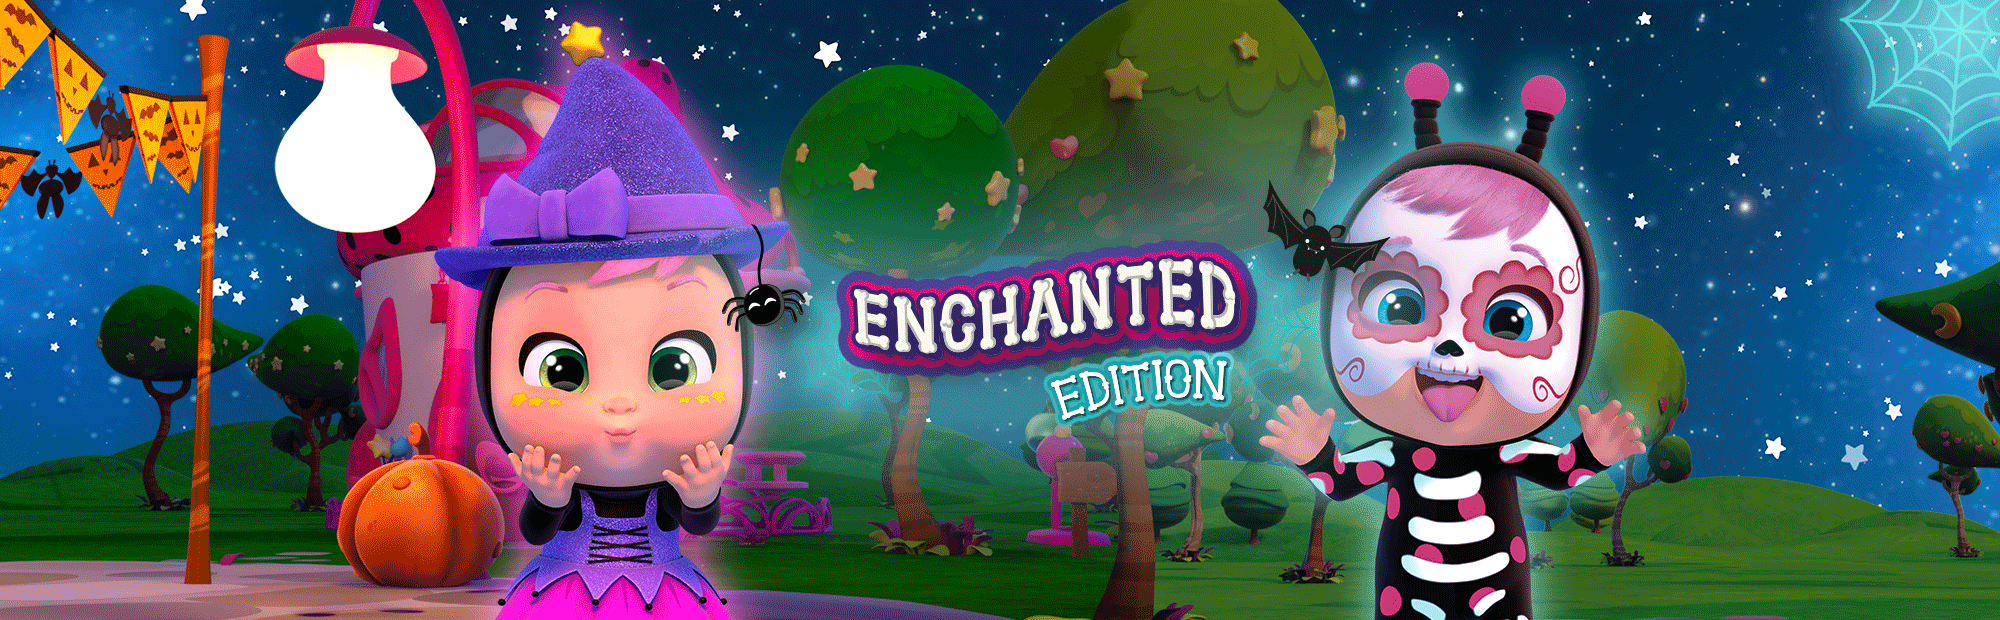 Enchanted Edition